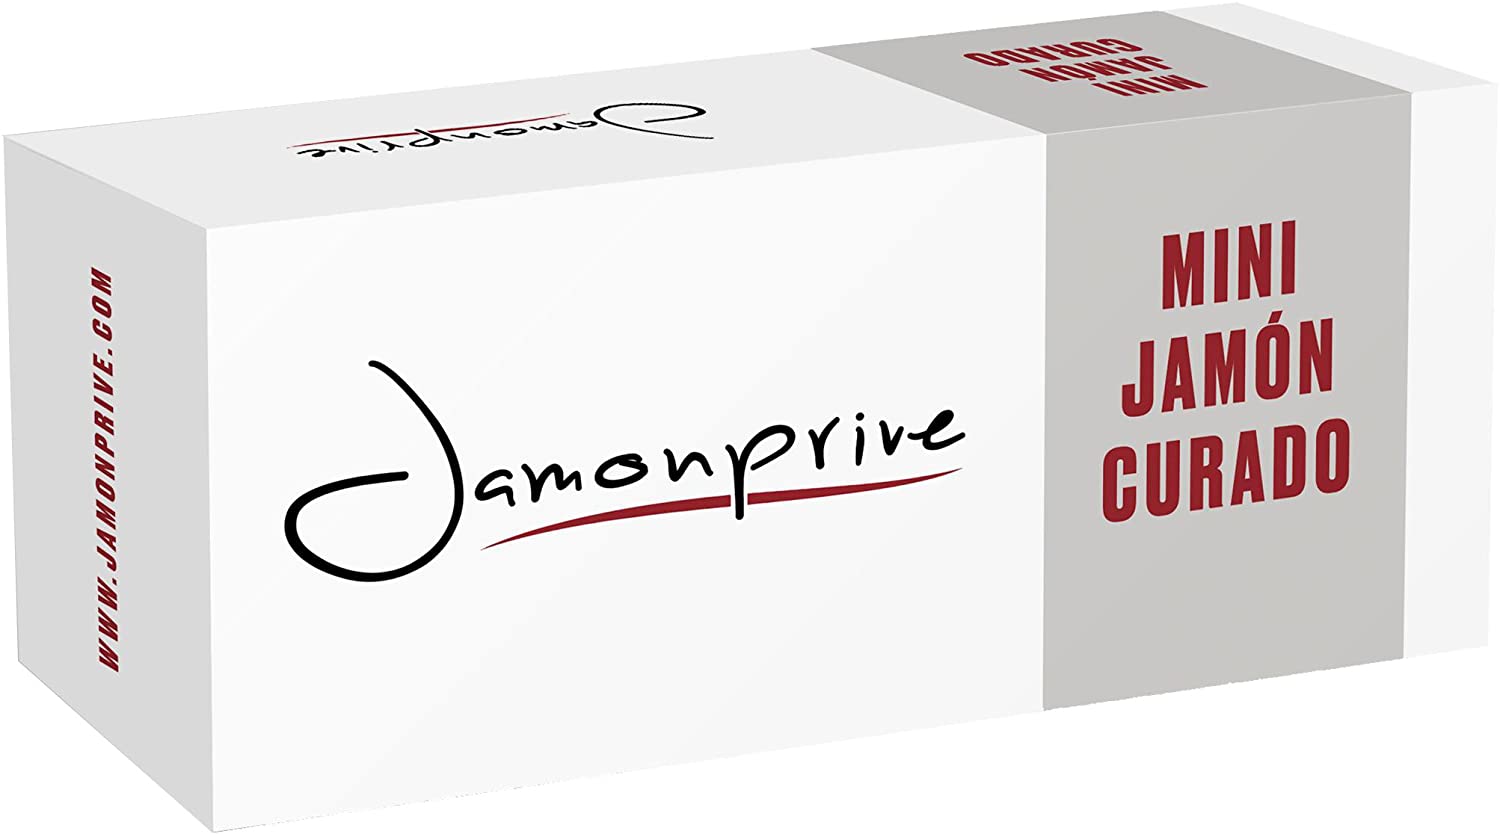  Jamón Curado Deshuesado + Jamonero Kit Version Mini de 1 Kg Jamonprive 